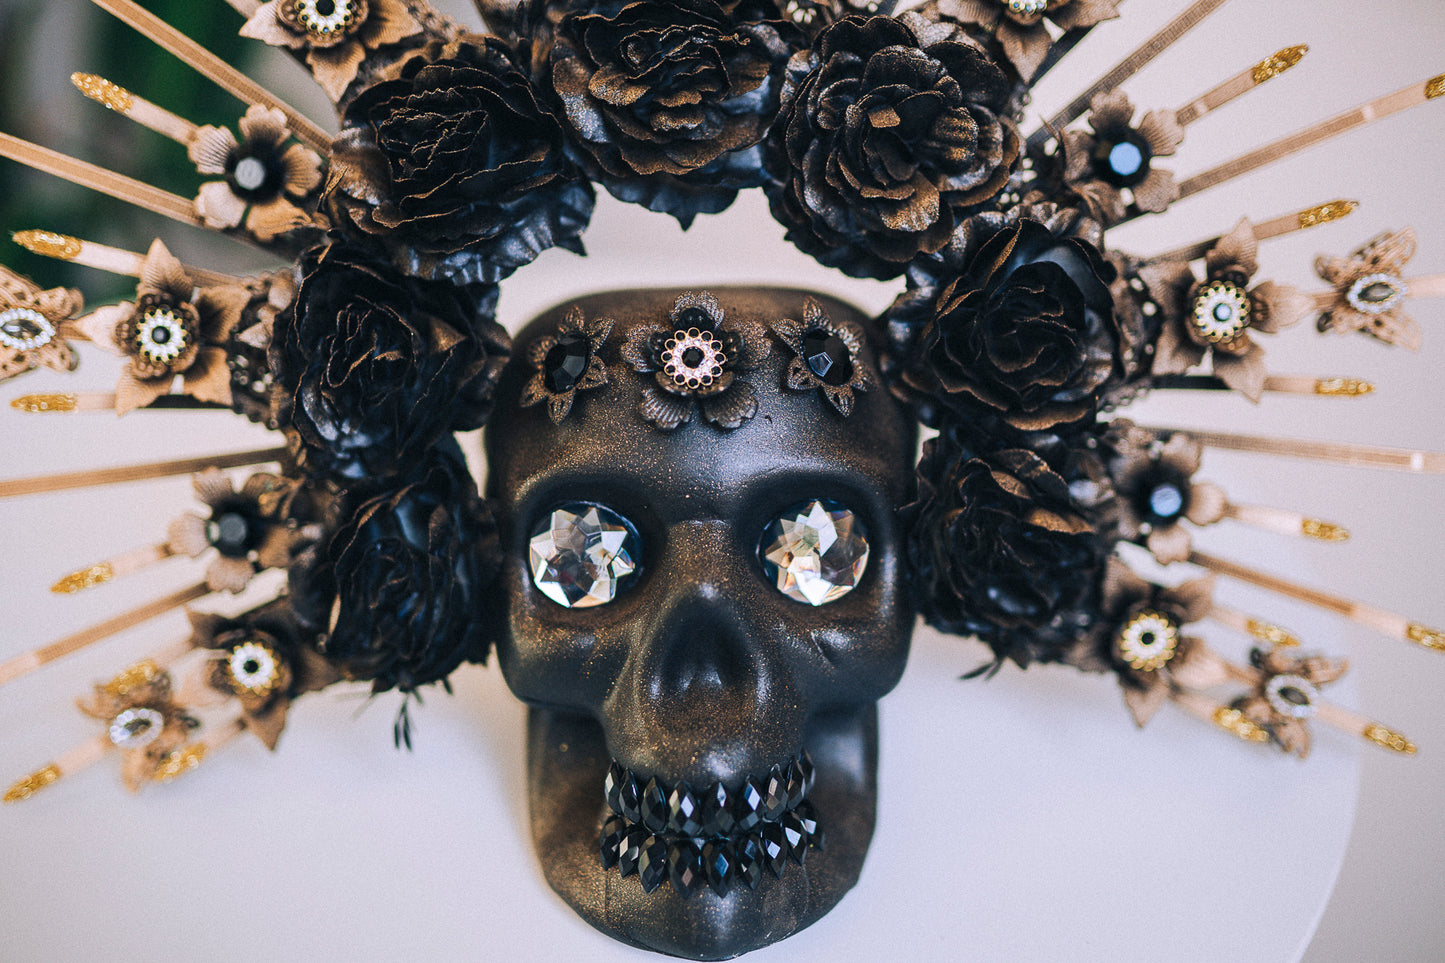 Black Sugar Skull Home Decoration Halloween